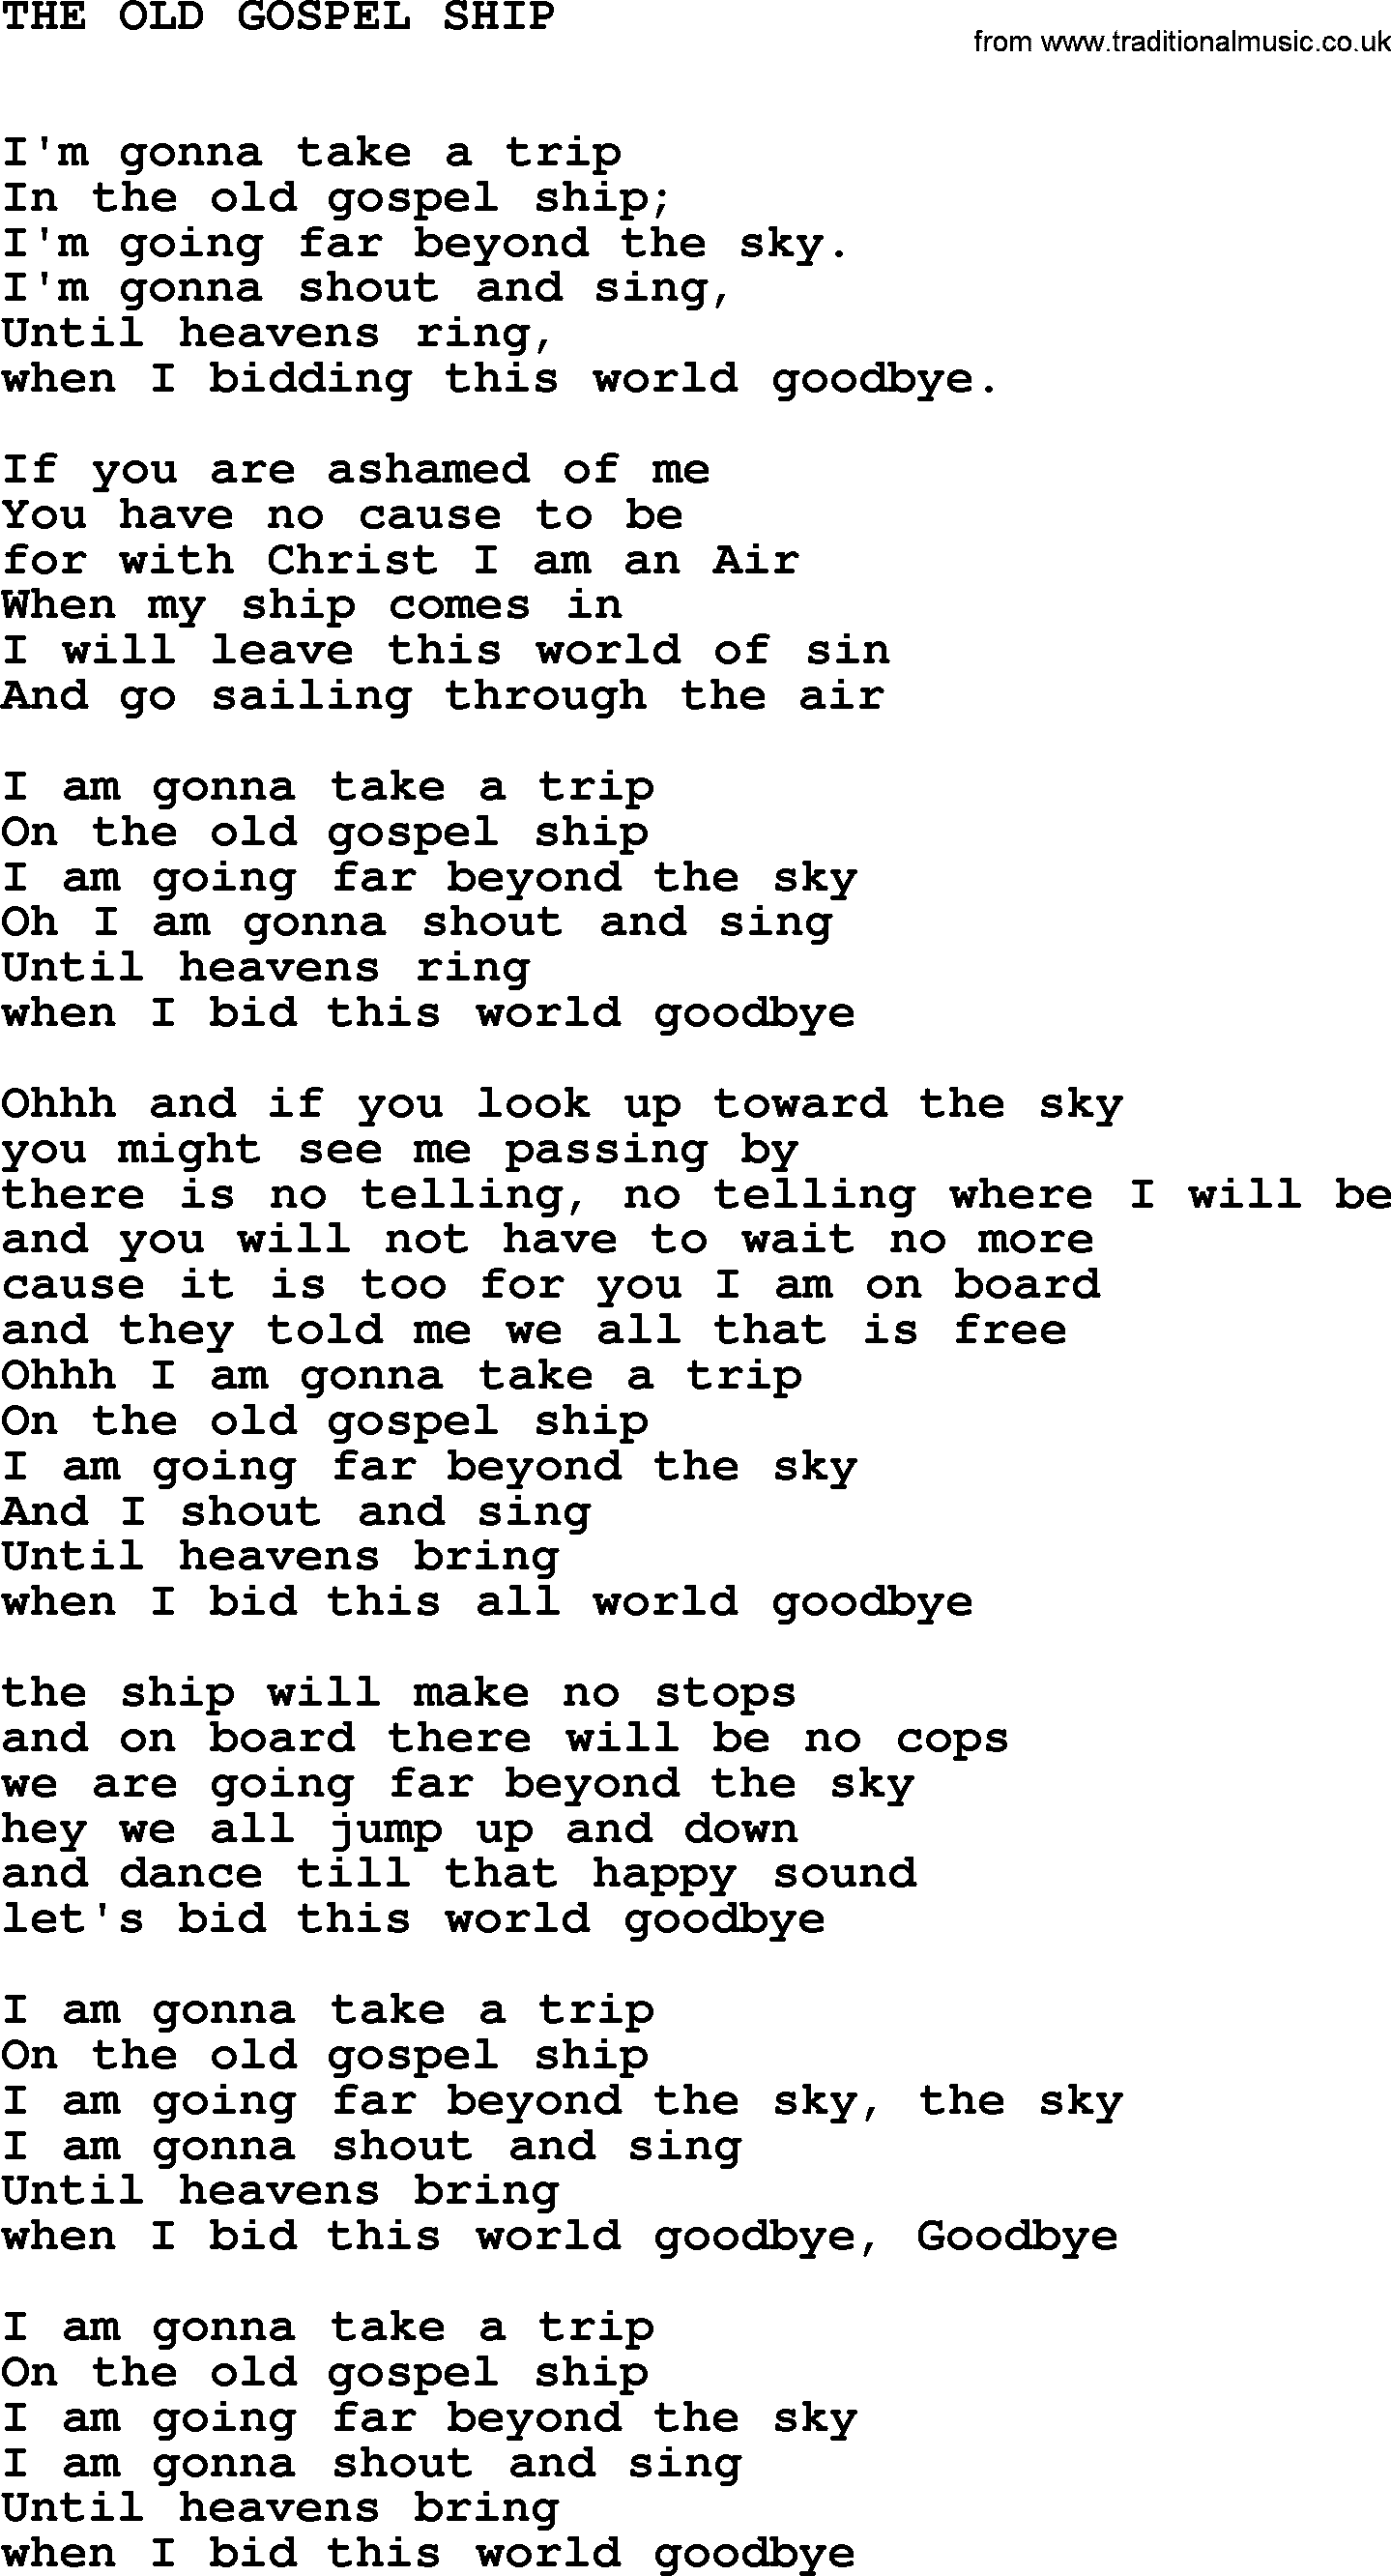 Johnny Cash song The Old Gospel Ship.txt lyrics